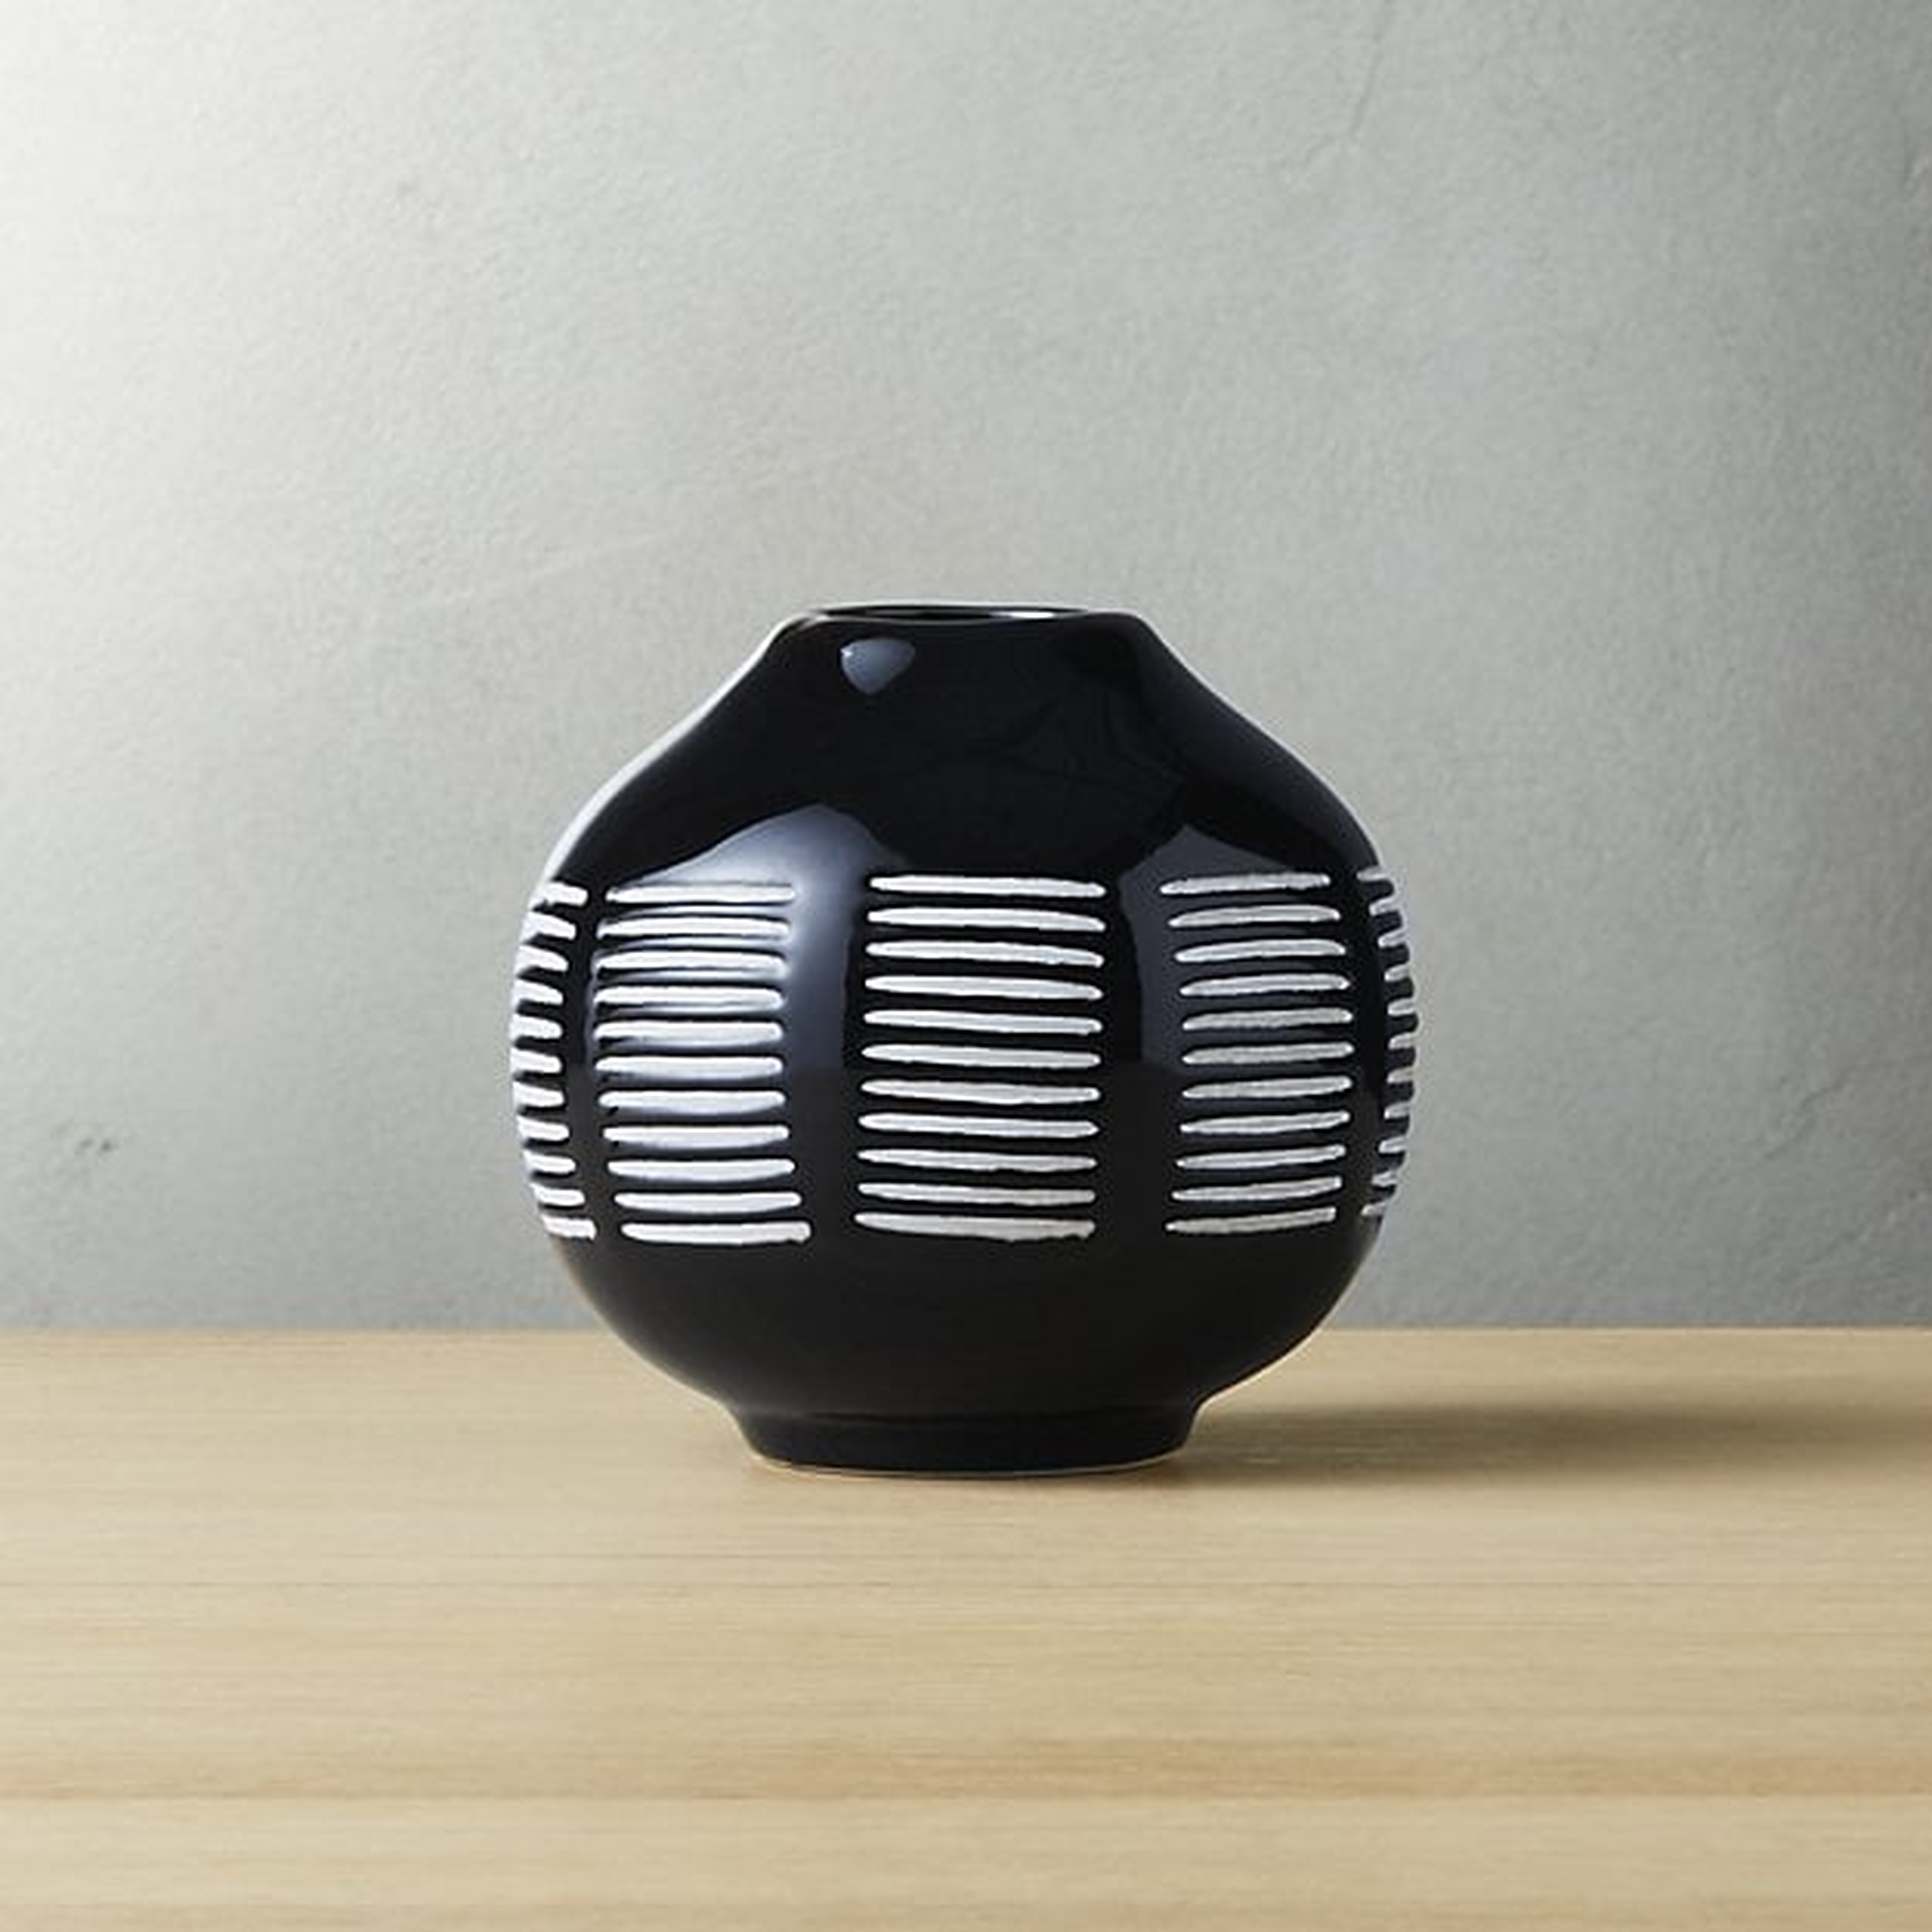 stitch black and white ceramic vase - 4.25"H - CB2